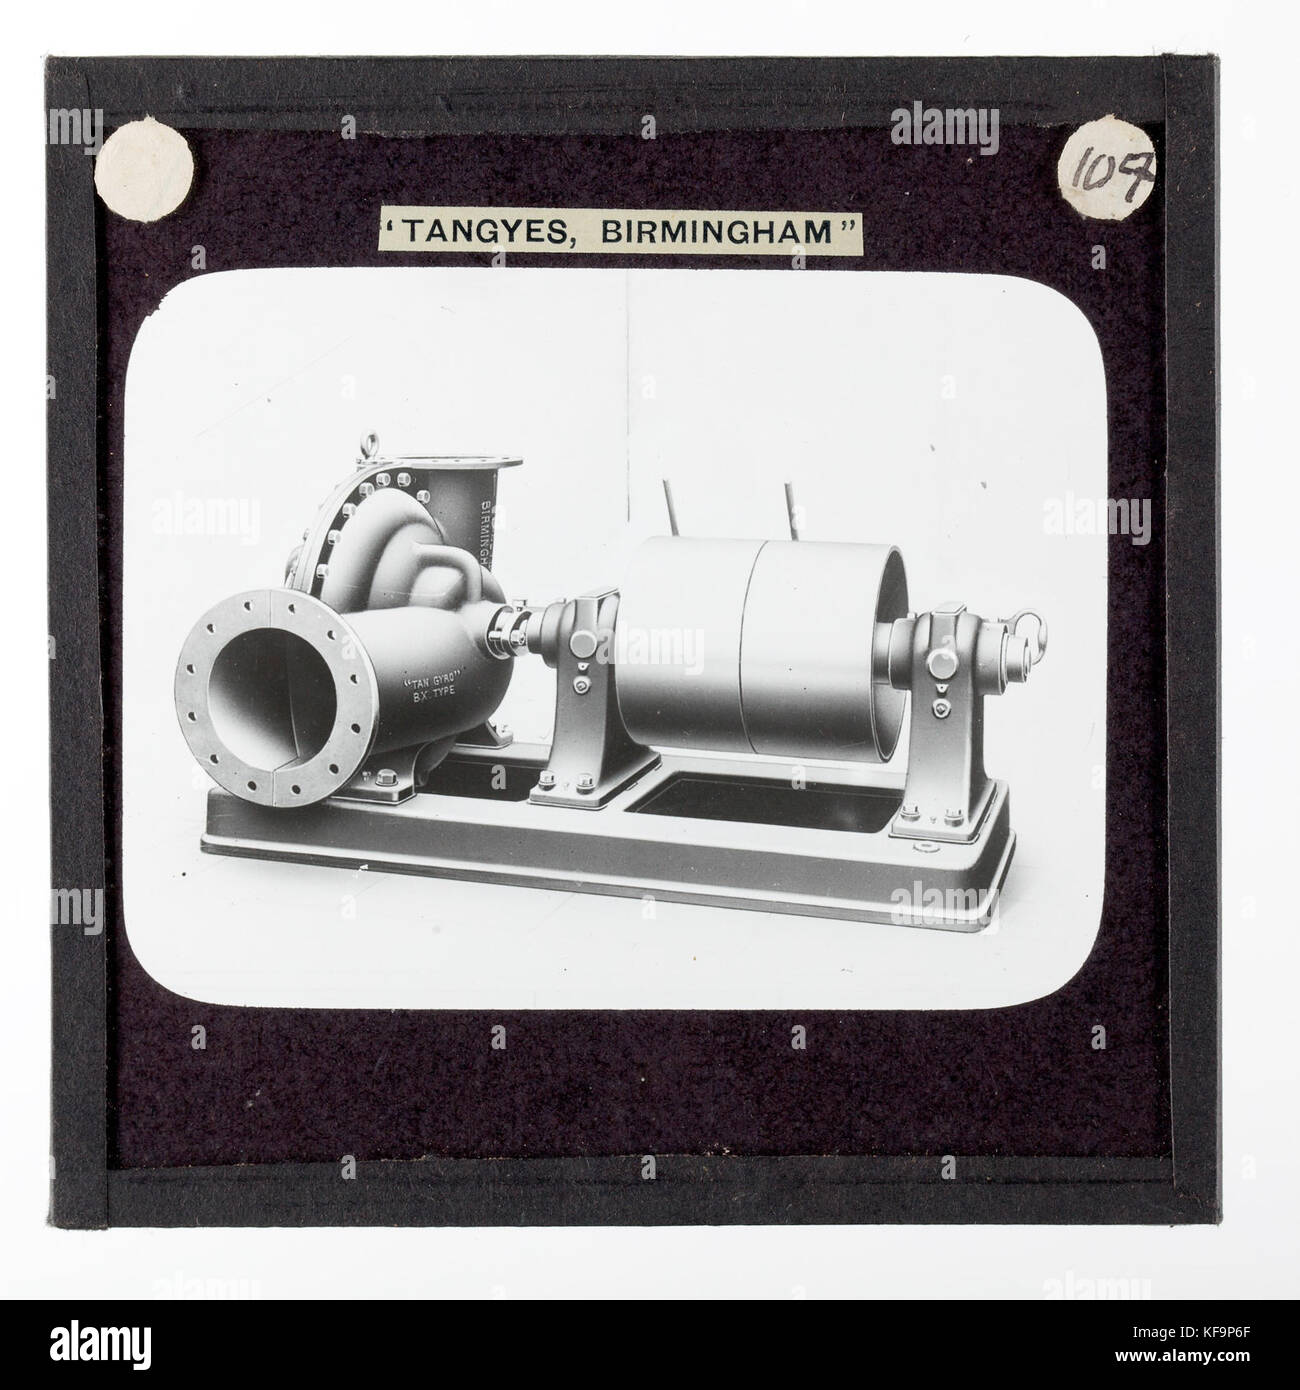 Tangyes lanterne Ltd Type BX, pompe centrifuge, vers 1910 Banque D'Images